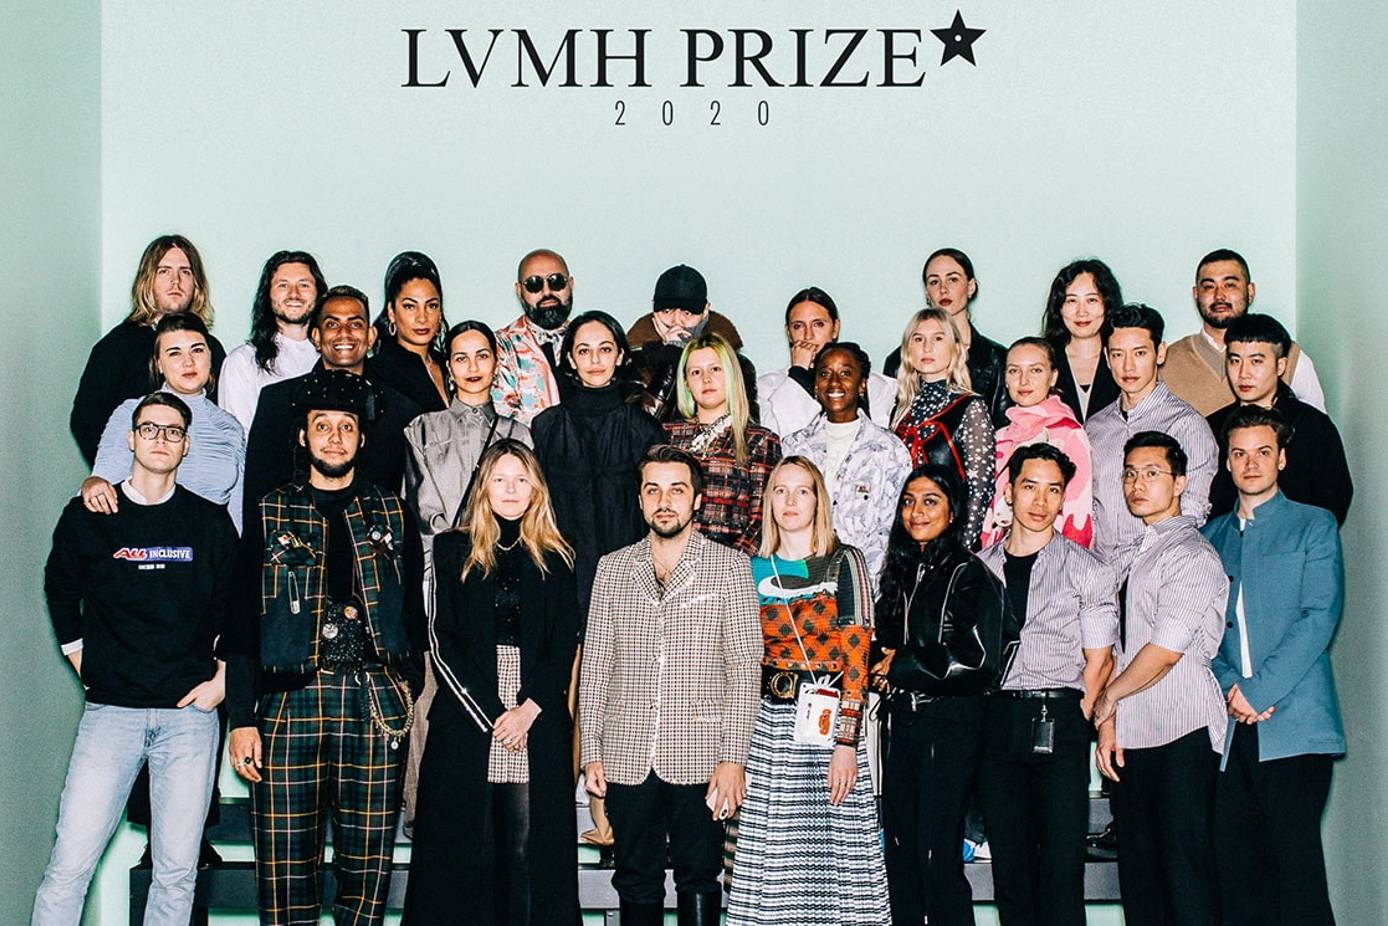 lvmh prize